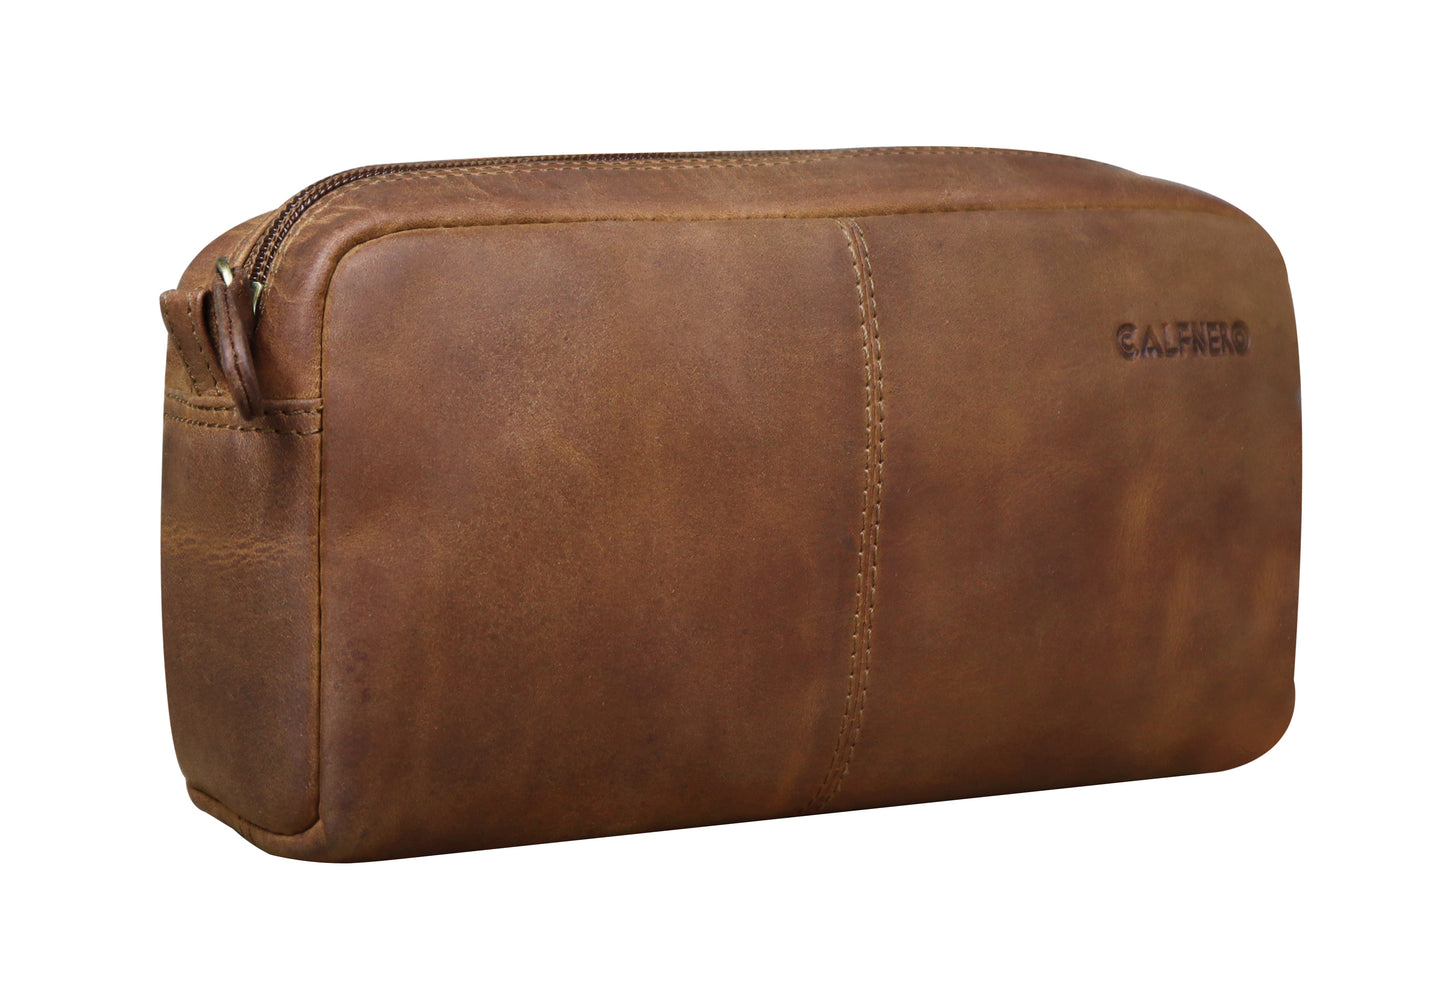 Calfnero Genuine Leather Toiletry Bag Shaving Kit Bag (S-645-Hunter)